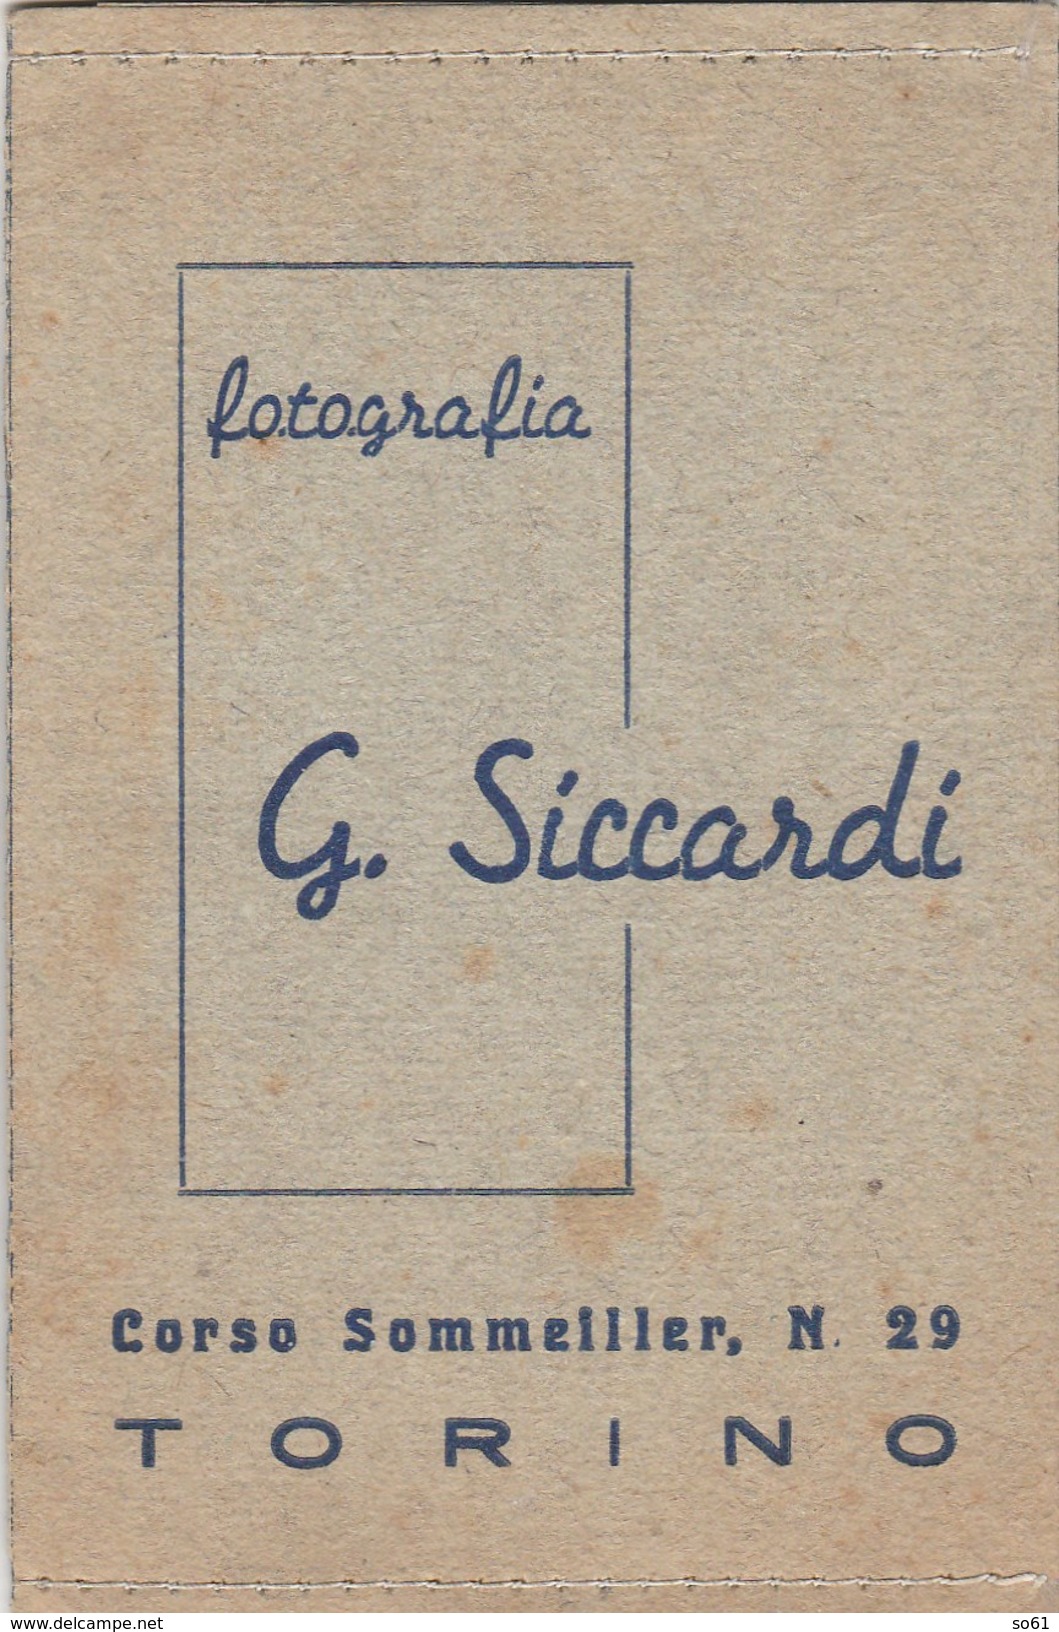 6308. Lp   Fotografia Siccardi Torino Cartoline Tessere Sviluppo Stampa - Matériel Et Accessoires